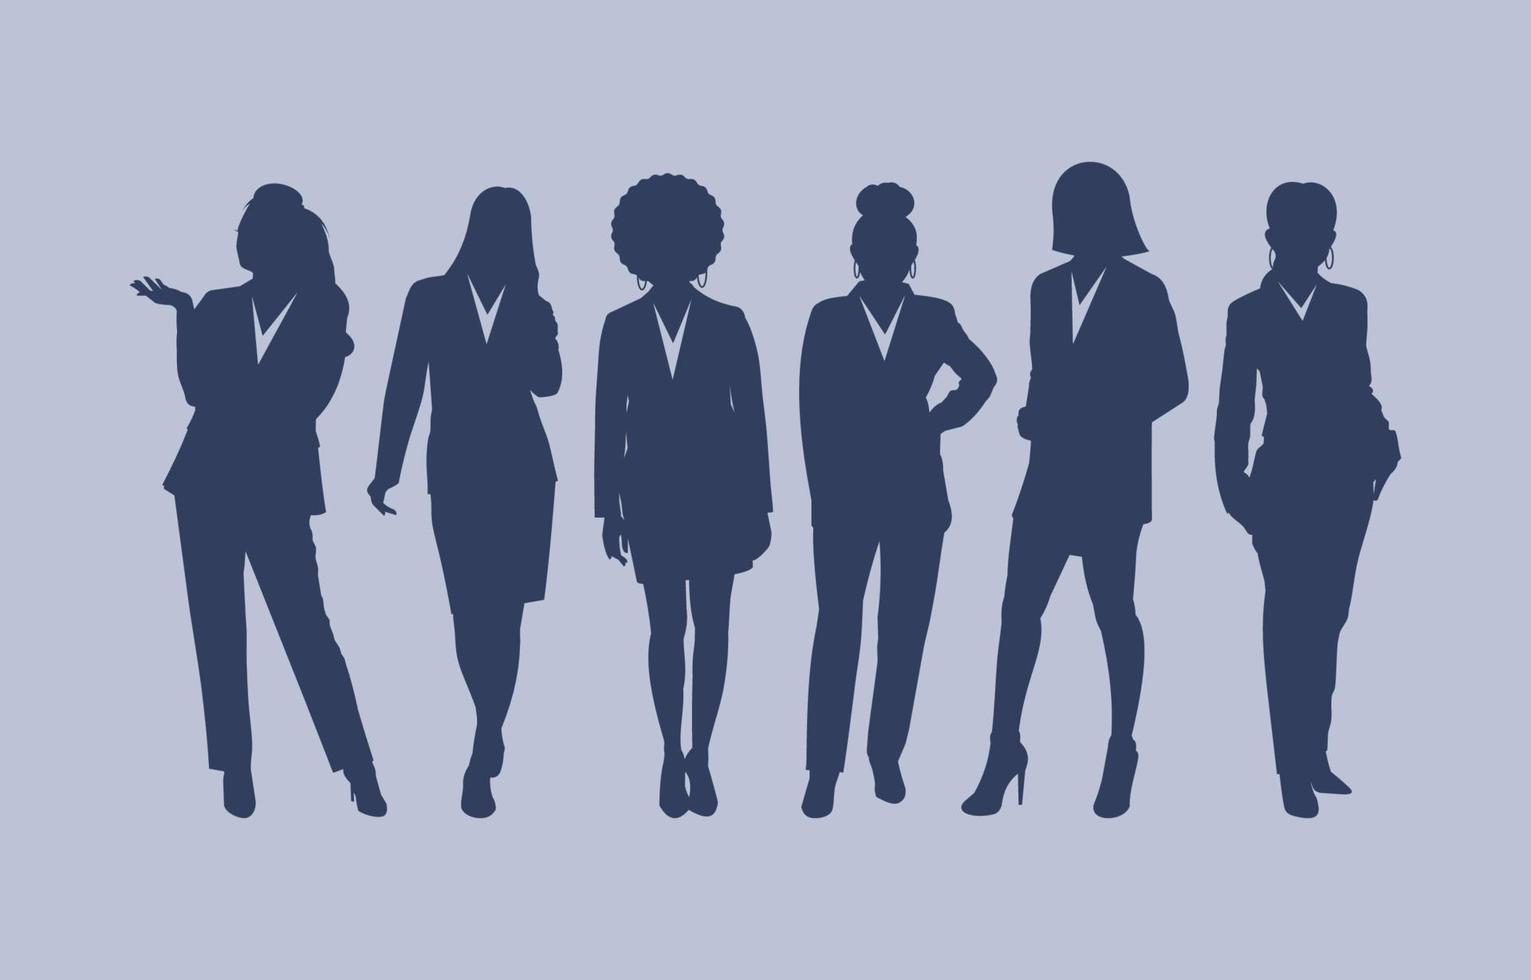 zakenmensen silhouetten vrouwen karakter collectie vector